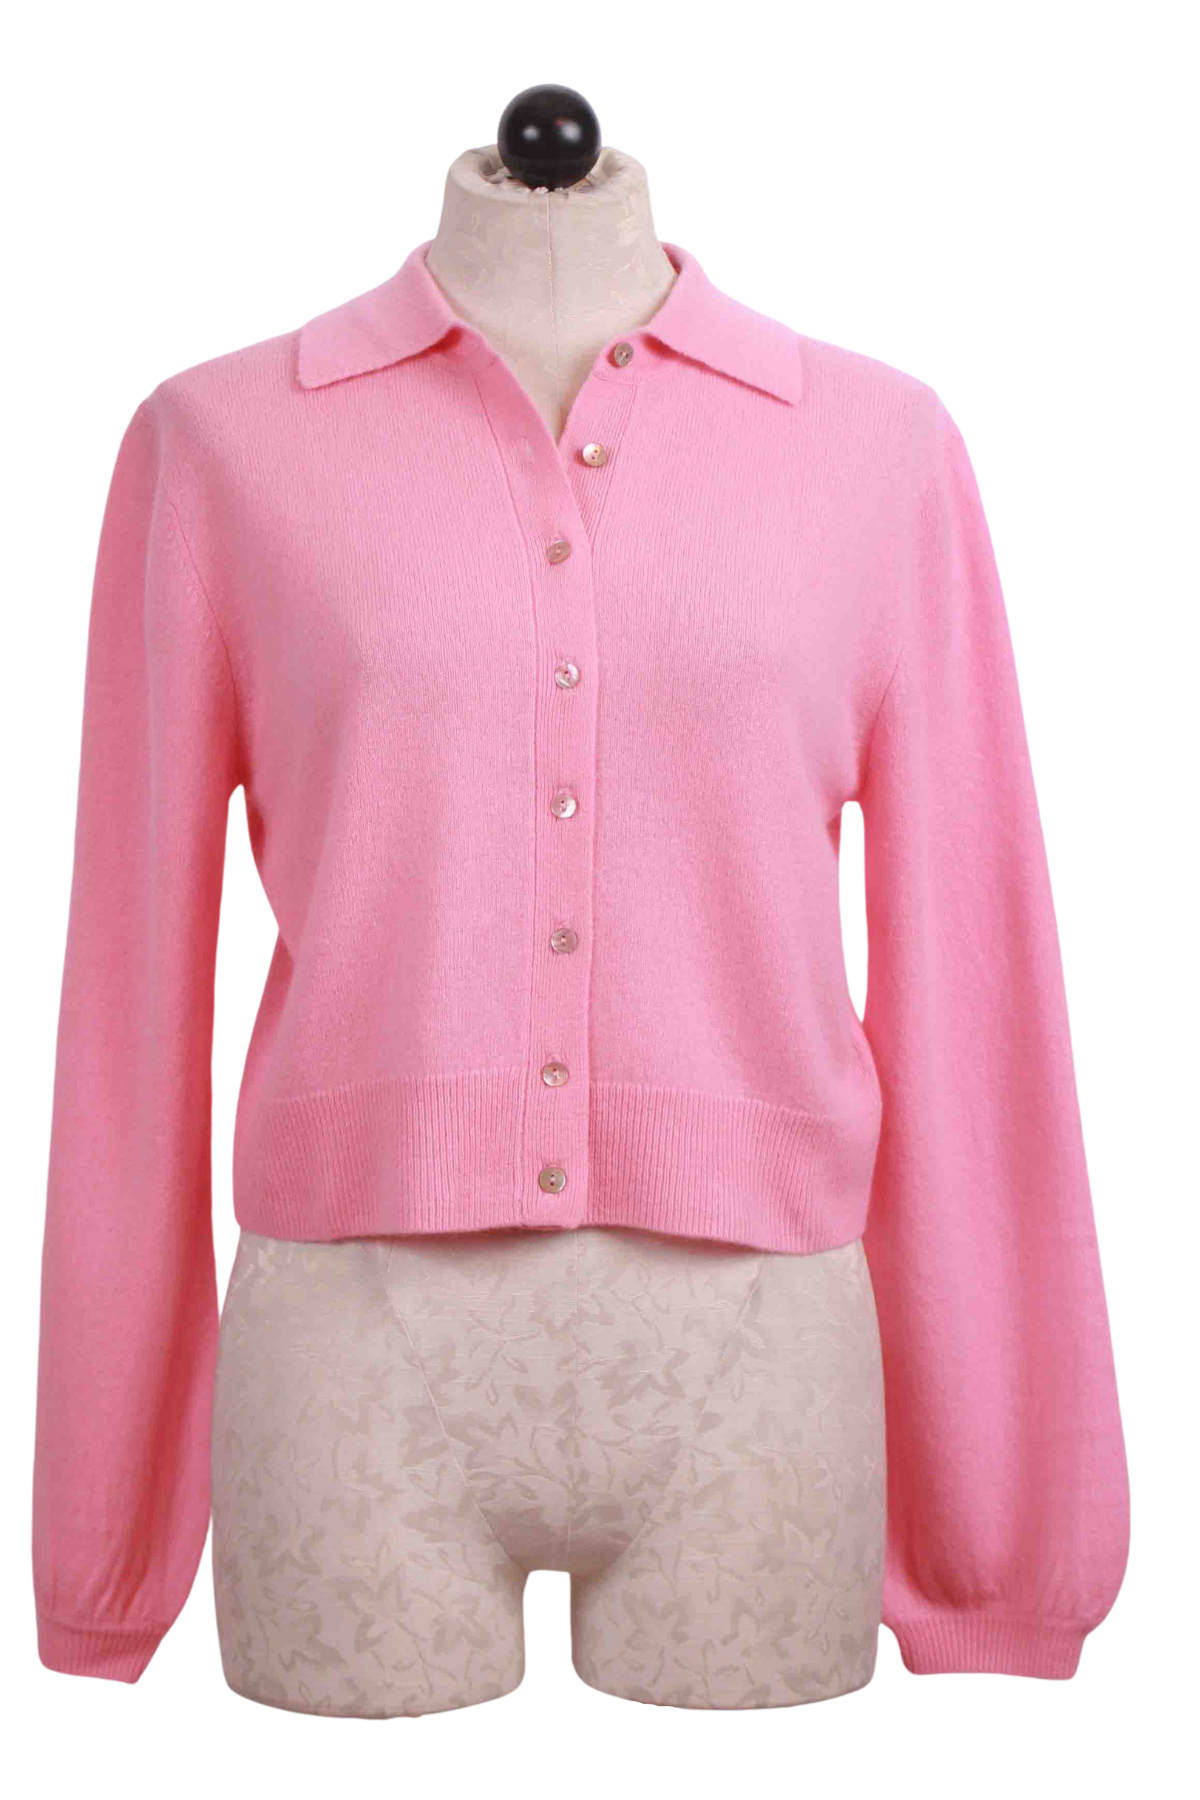 Bellini Pink Piha Blouse Style Cardigan by Crush